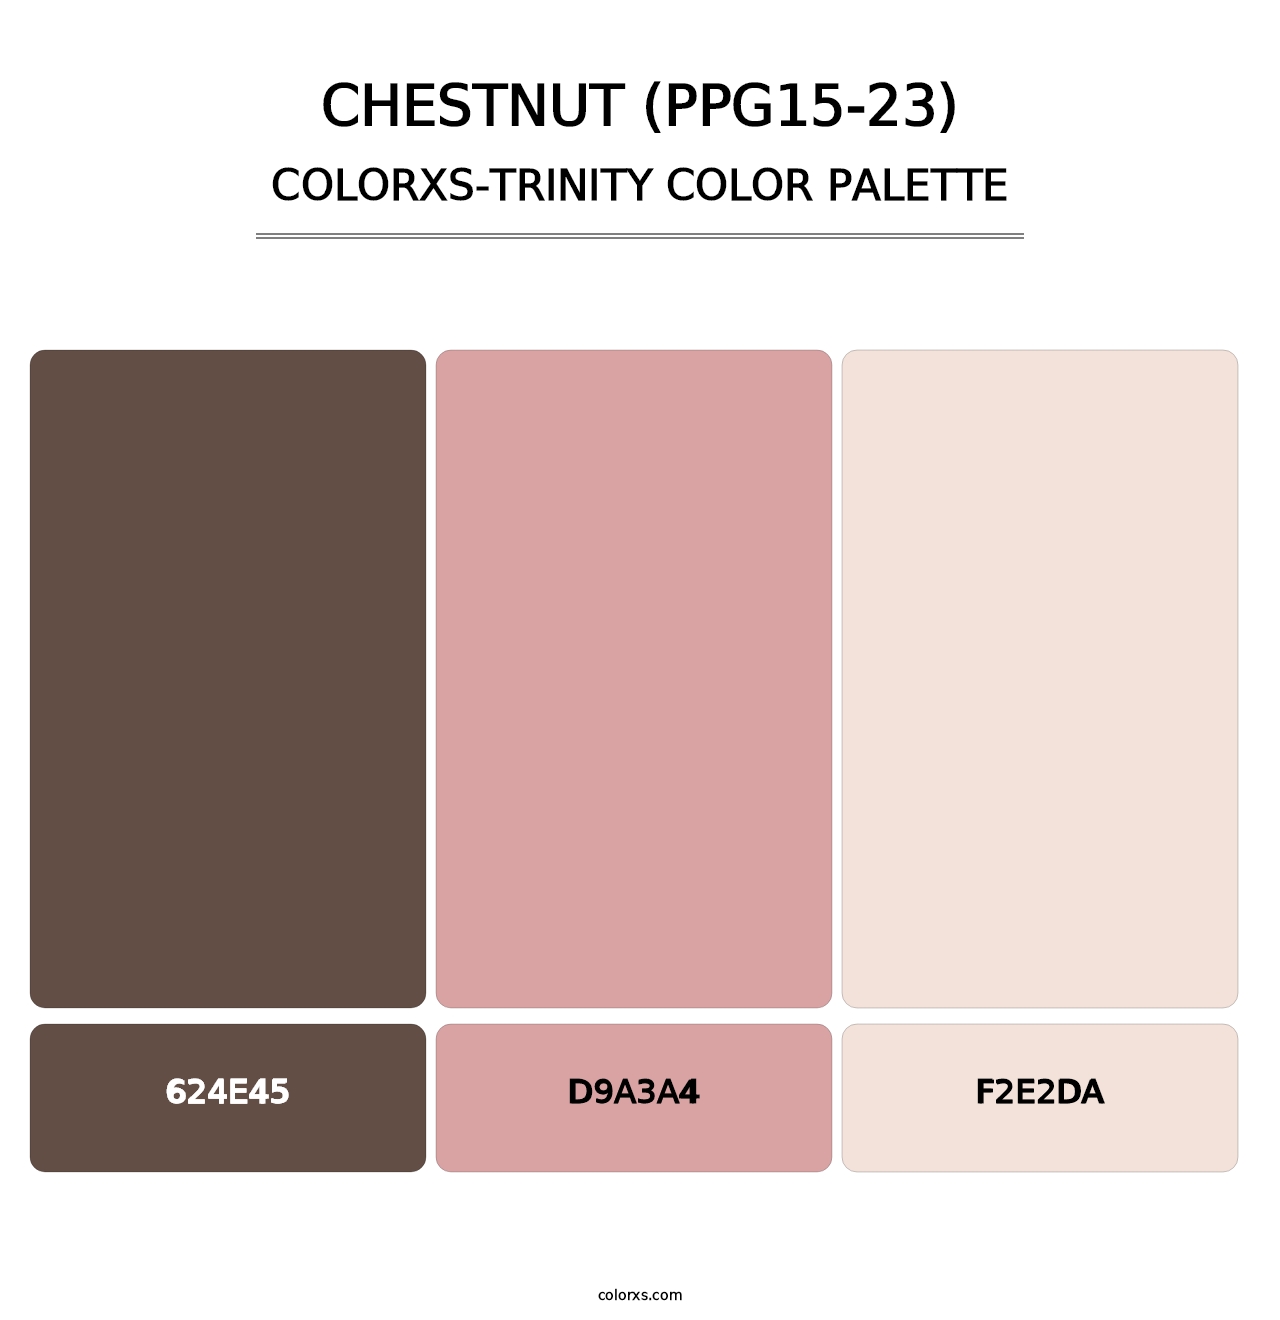 Chestnut (PPG15-23) - Colorxs Trinity Palette